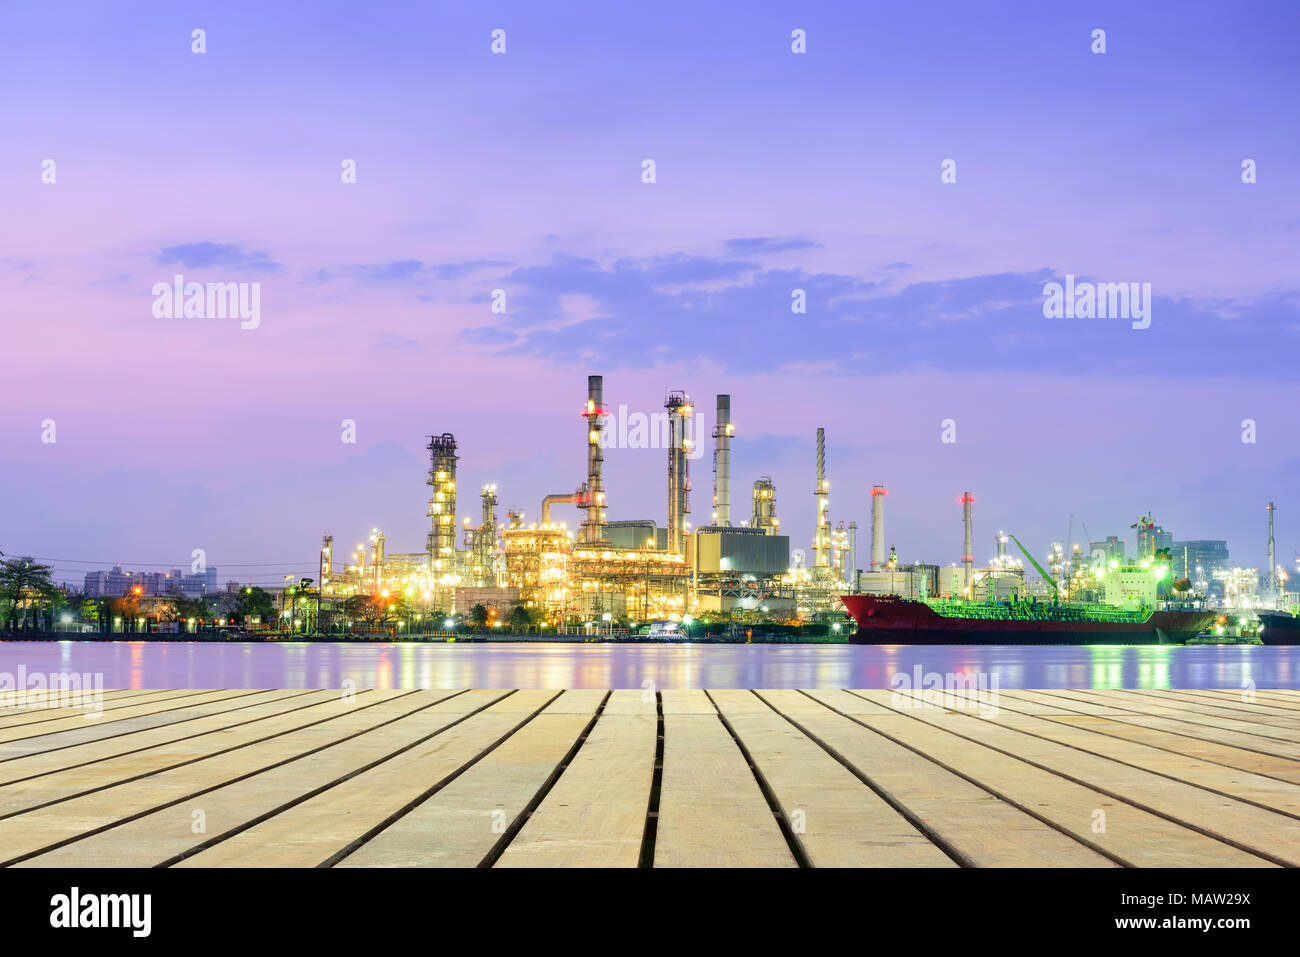 An oil refinery plant at sunrise scene. Stock Photo